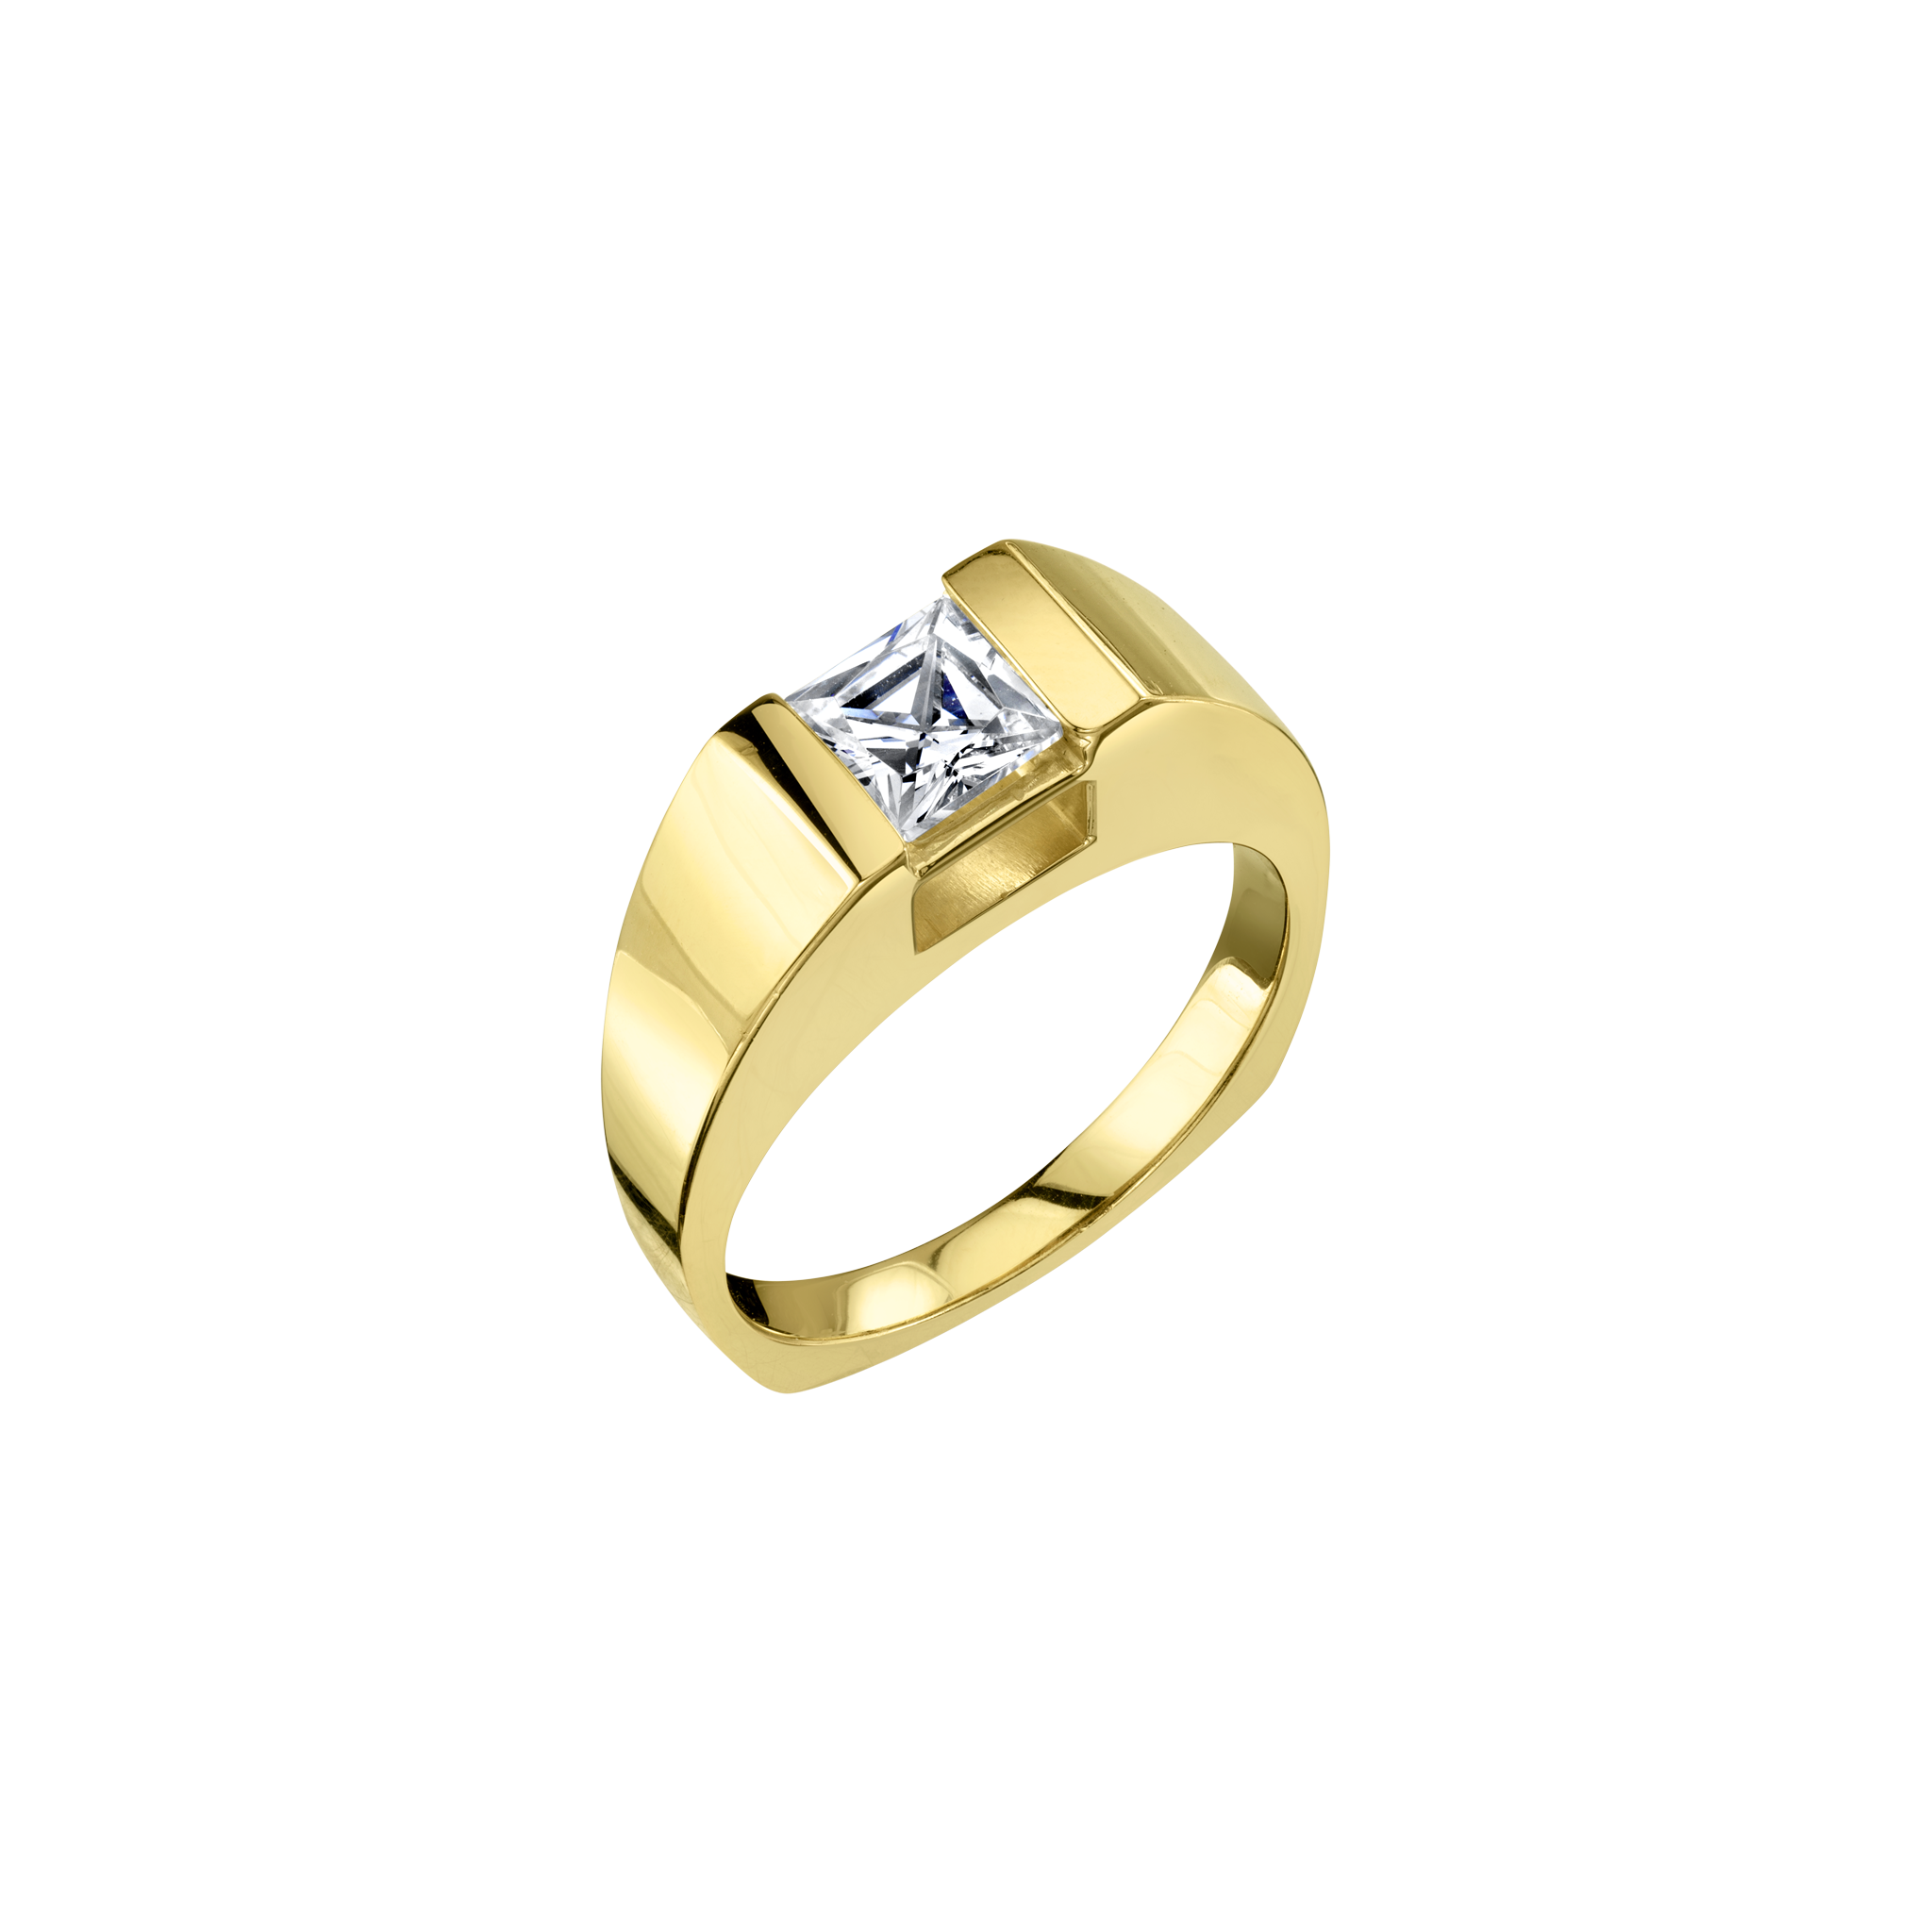 Bauhaus Ring with Princess Cut Diamond - Gabriela Artigas